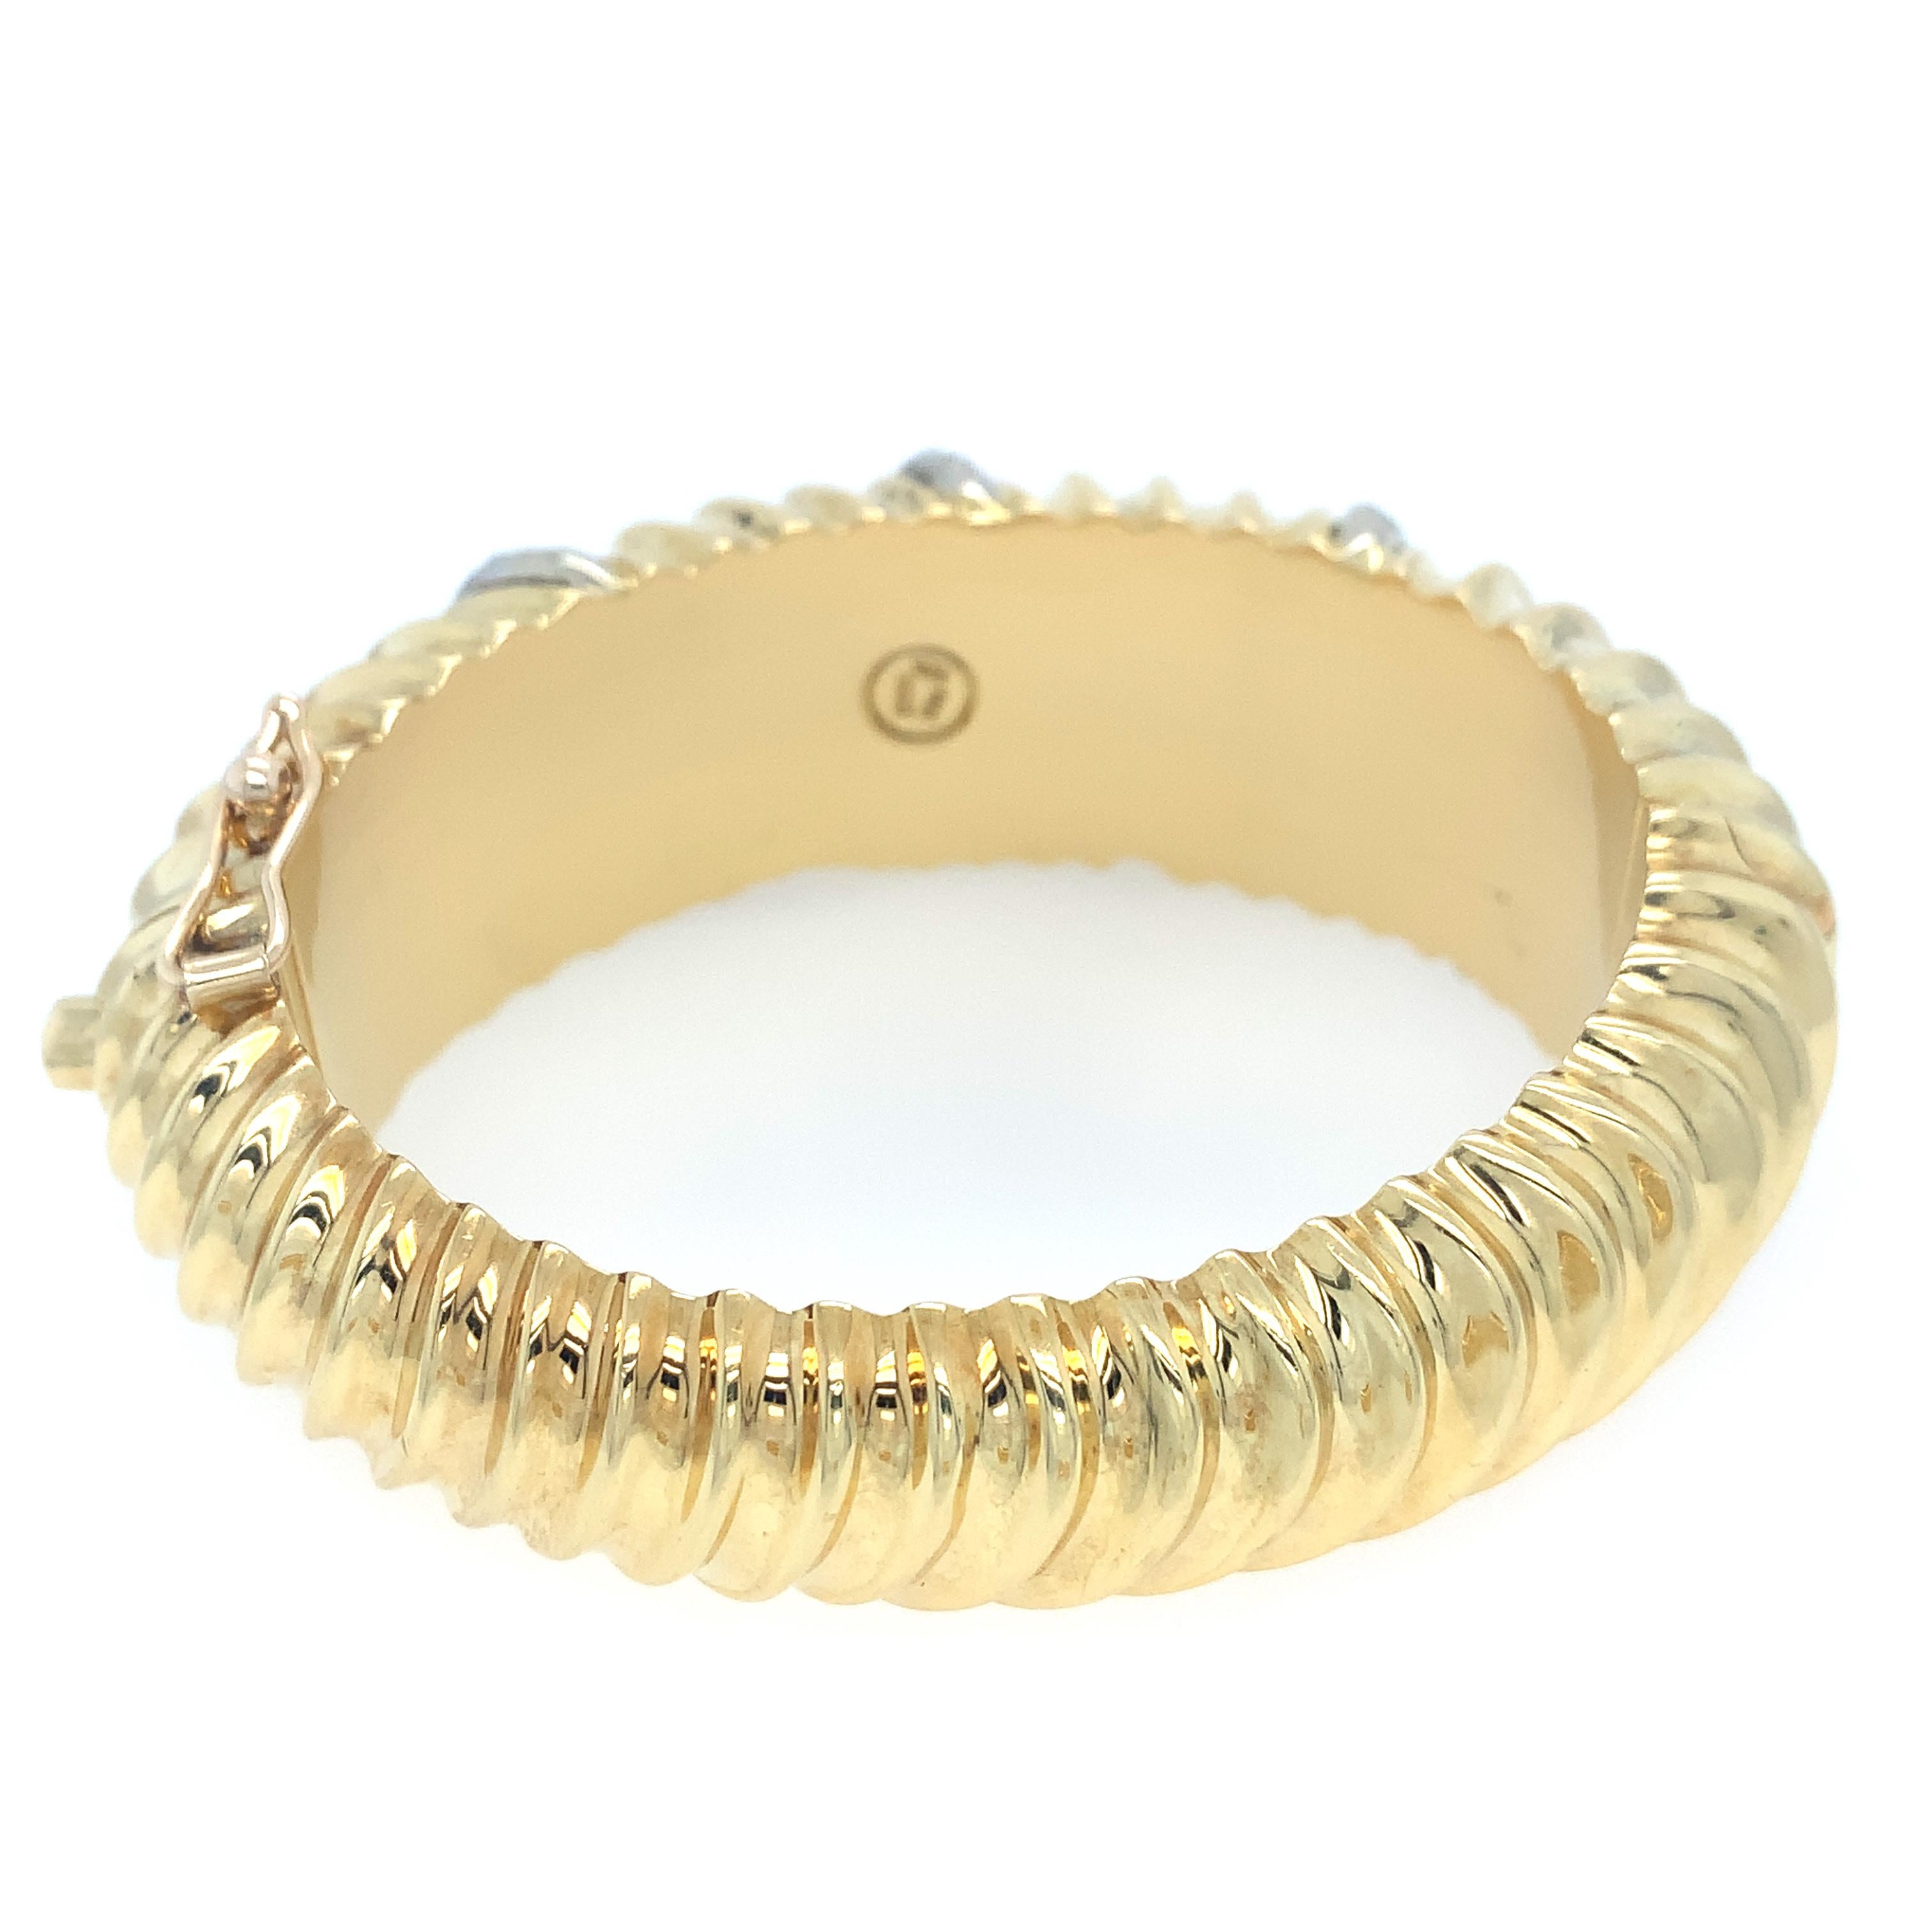 Modern Ruth Satsky 1.00 Carat Diamond and 18k Yellow Gold Bangle Bracelet